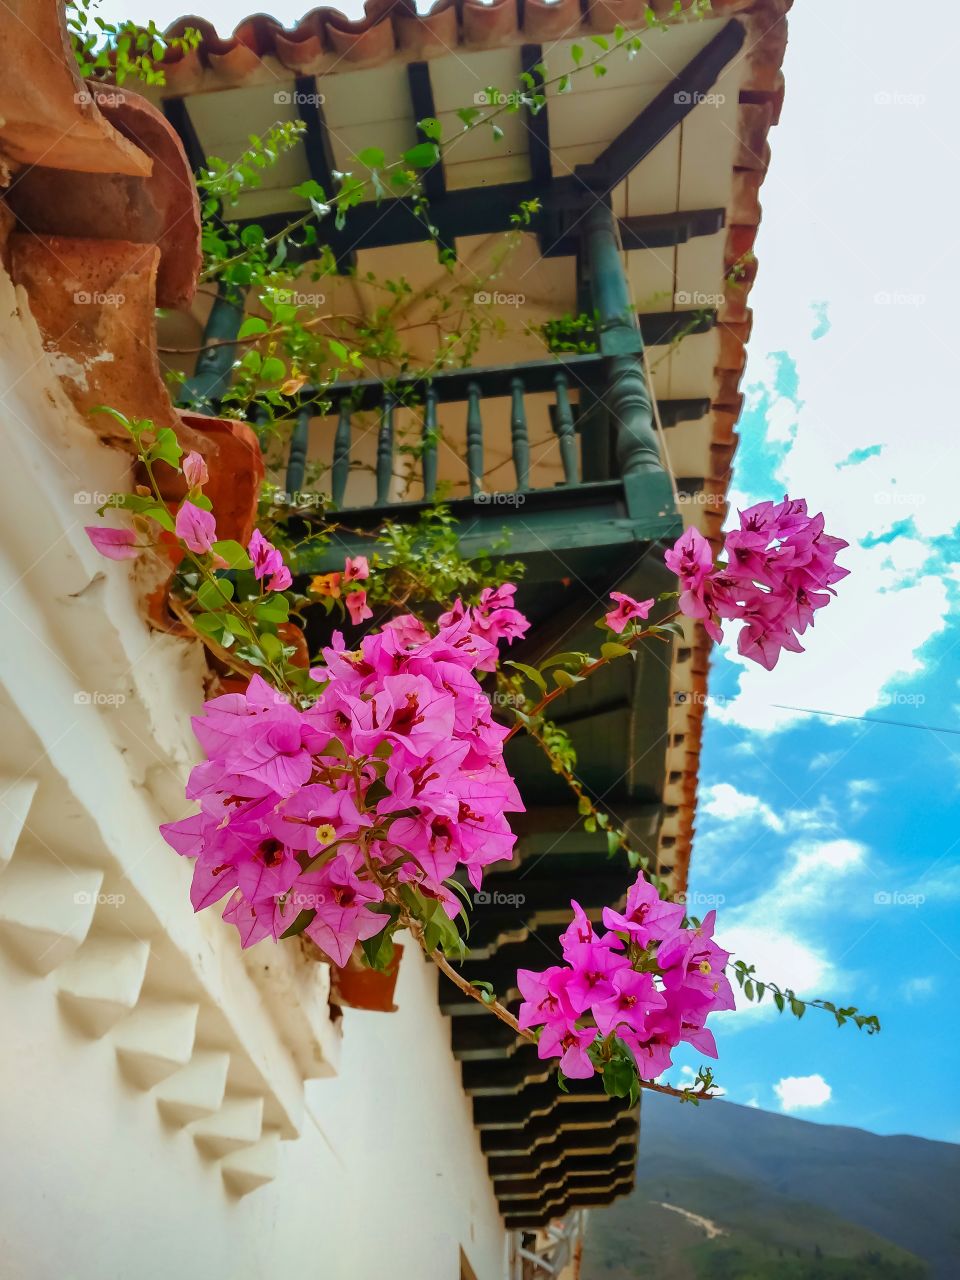 Flowers and balcony in Villa de Leyva Colombia